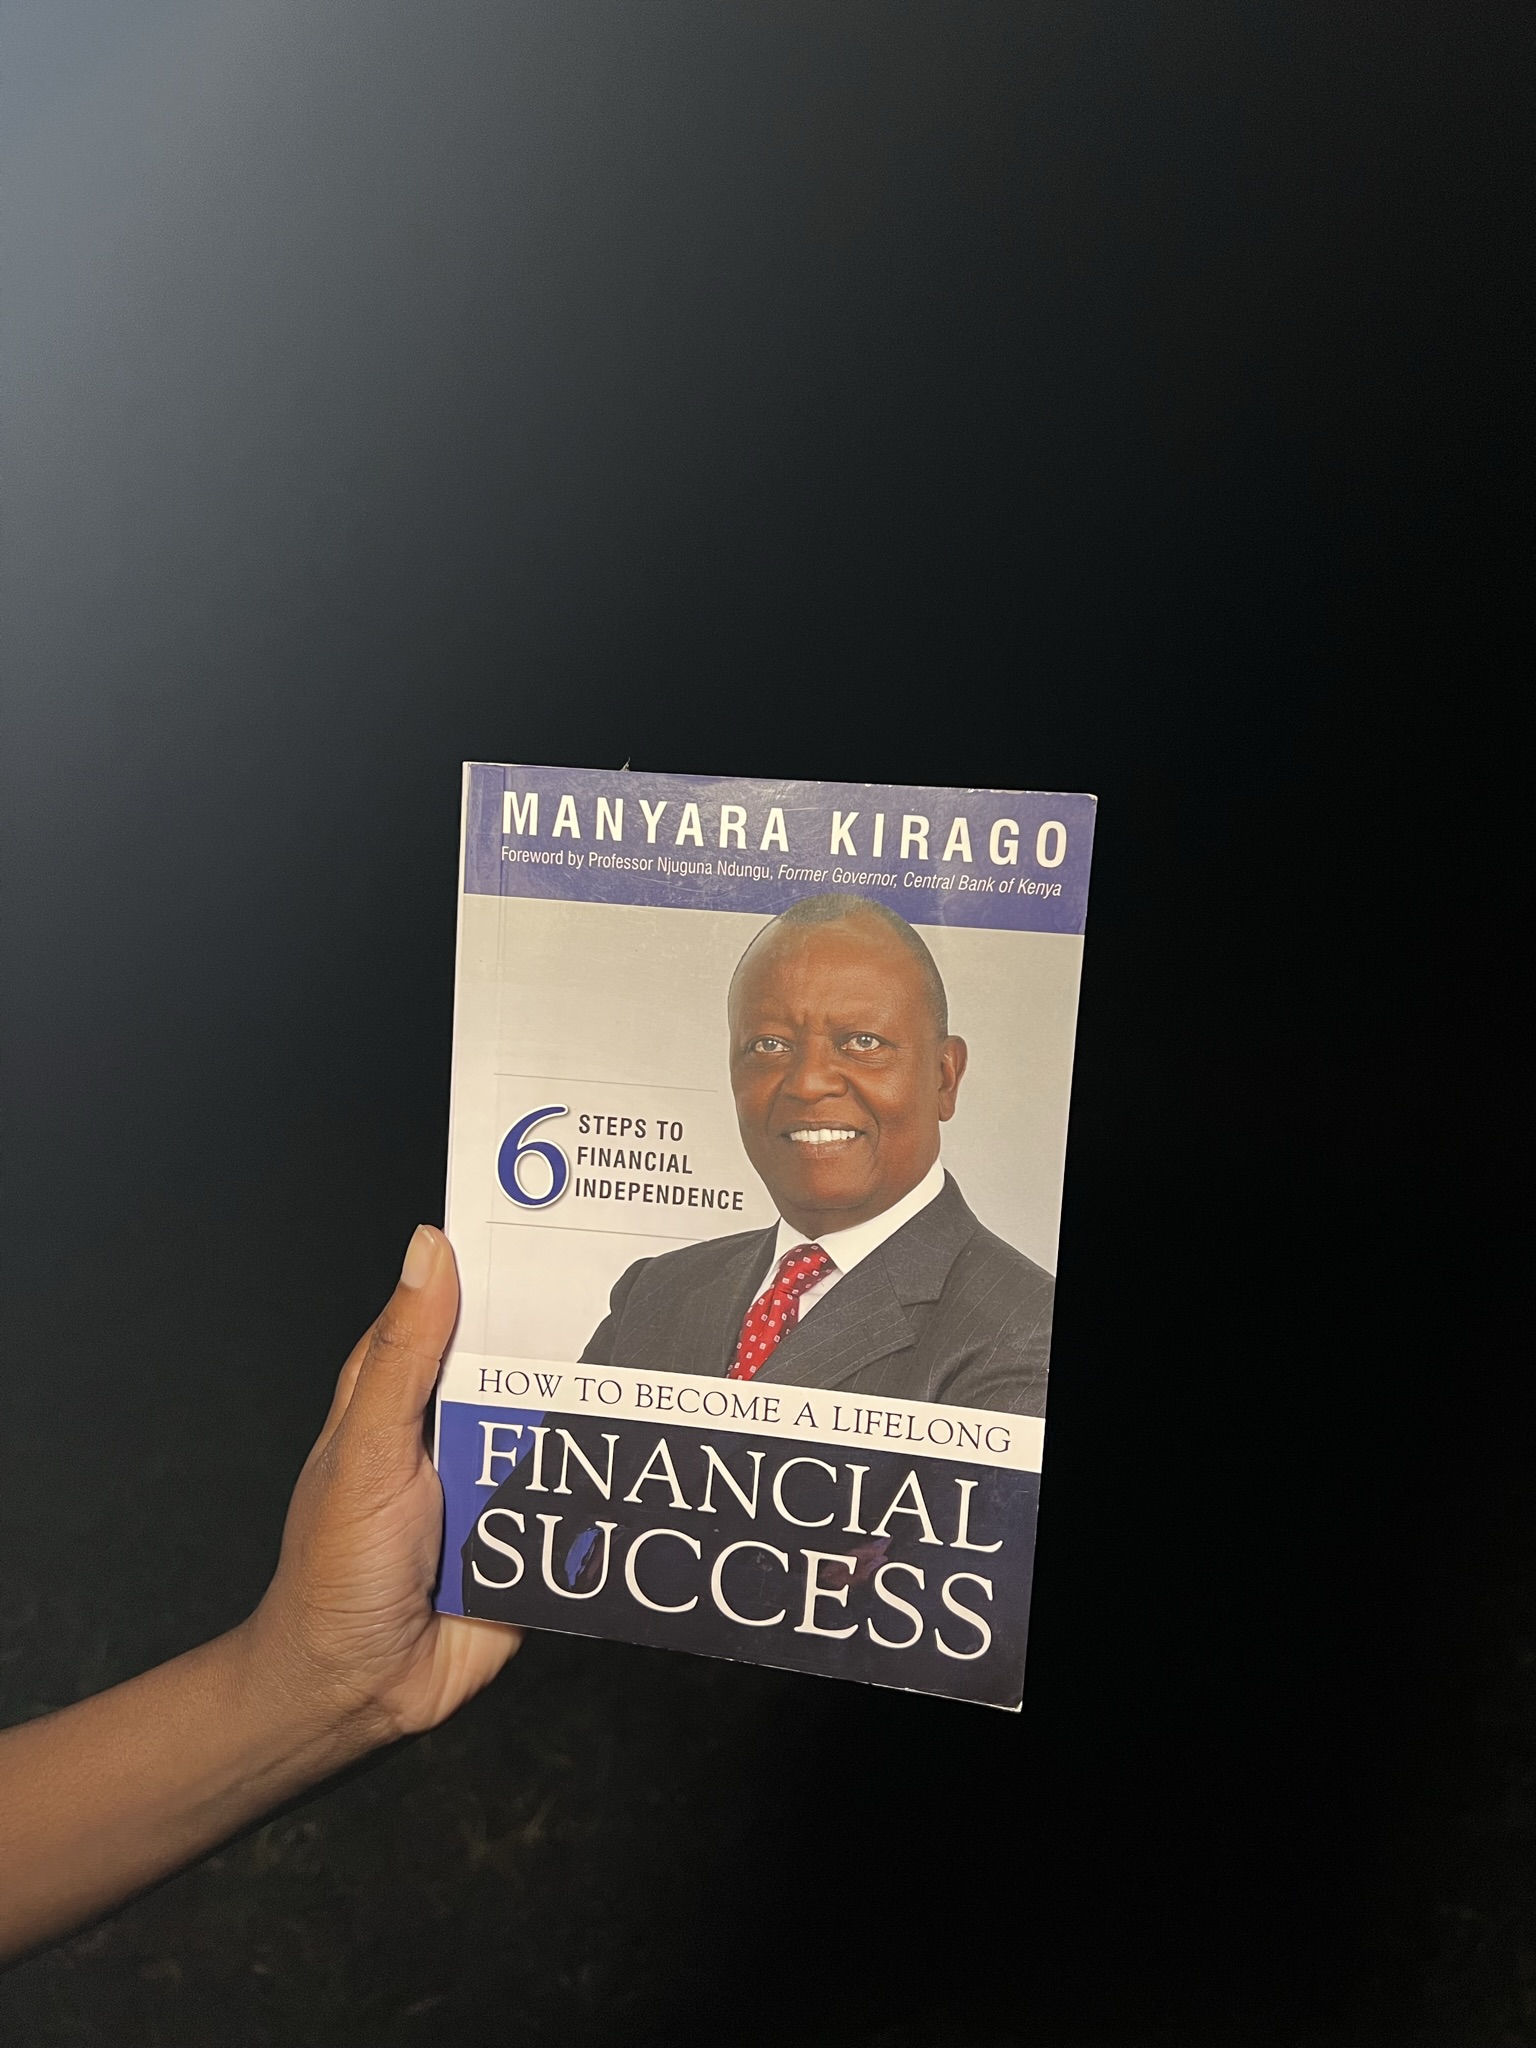 Holding a book, How to Become a Lifelong Financial Success by Manyara Kirago